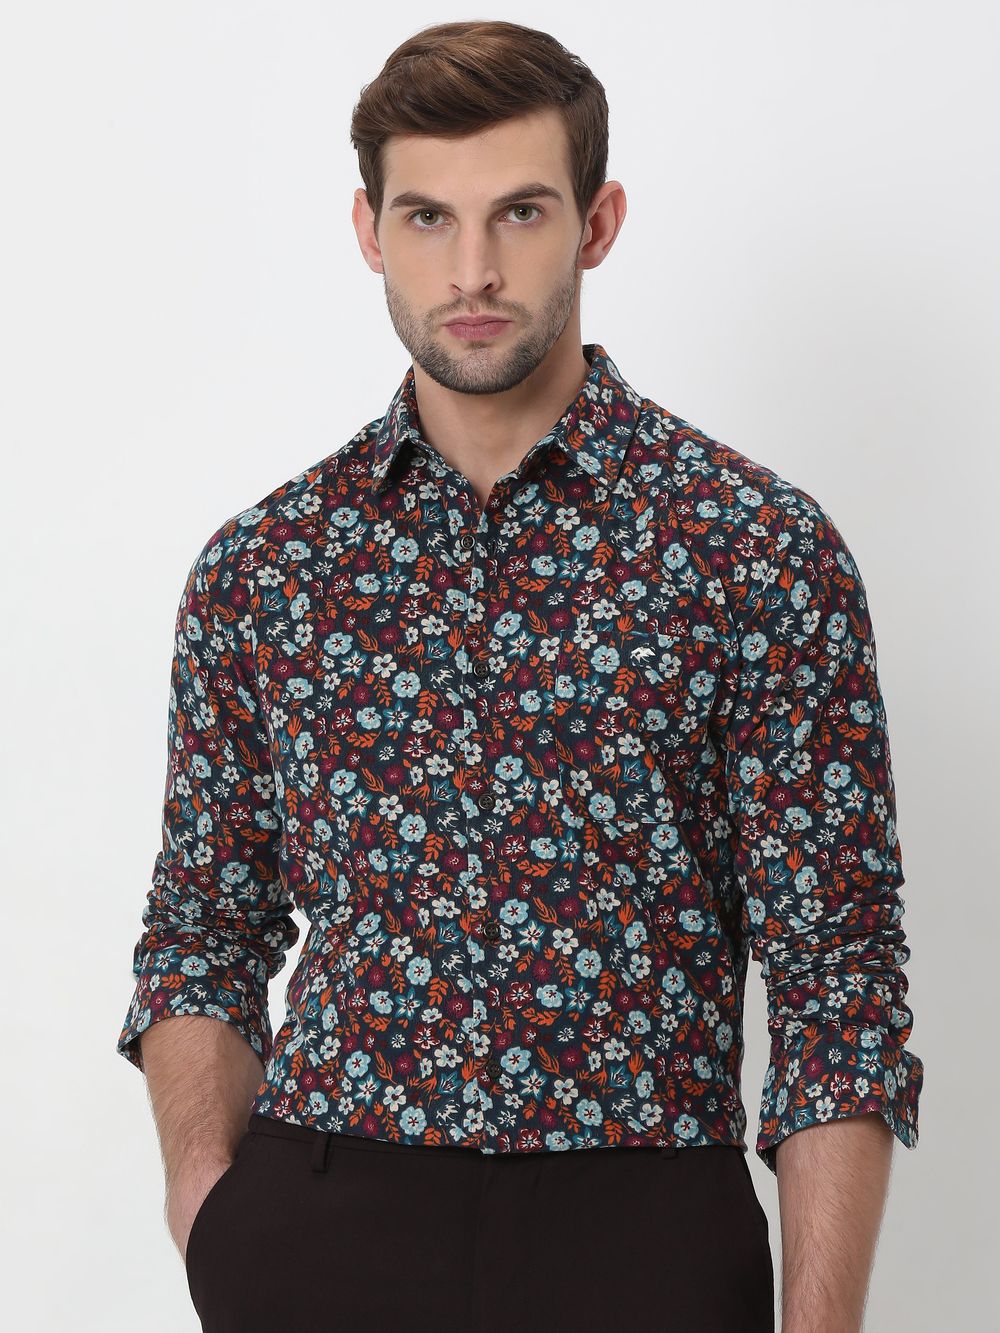 Teal & Multi Floral Print Corduroy Shirt